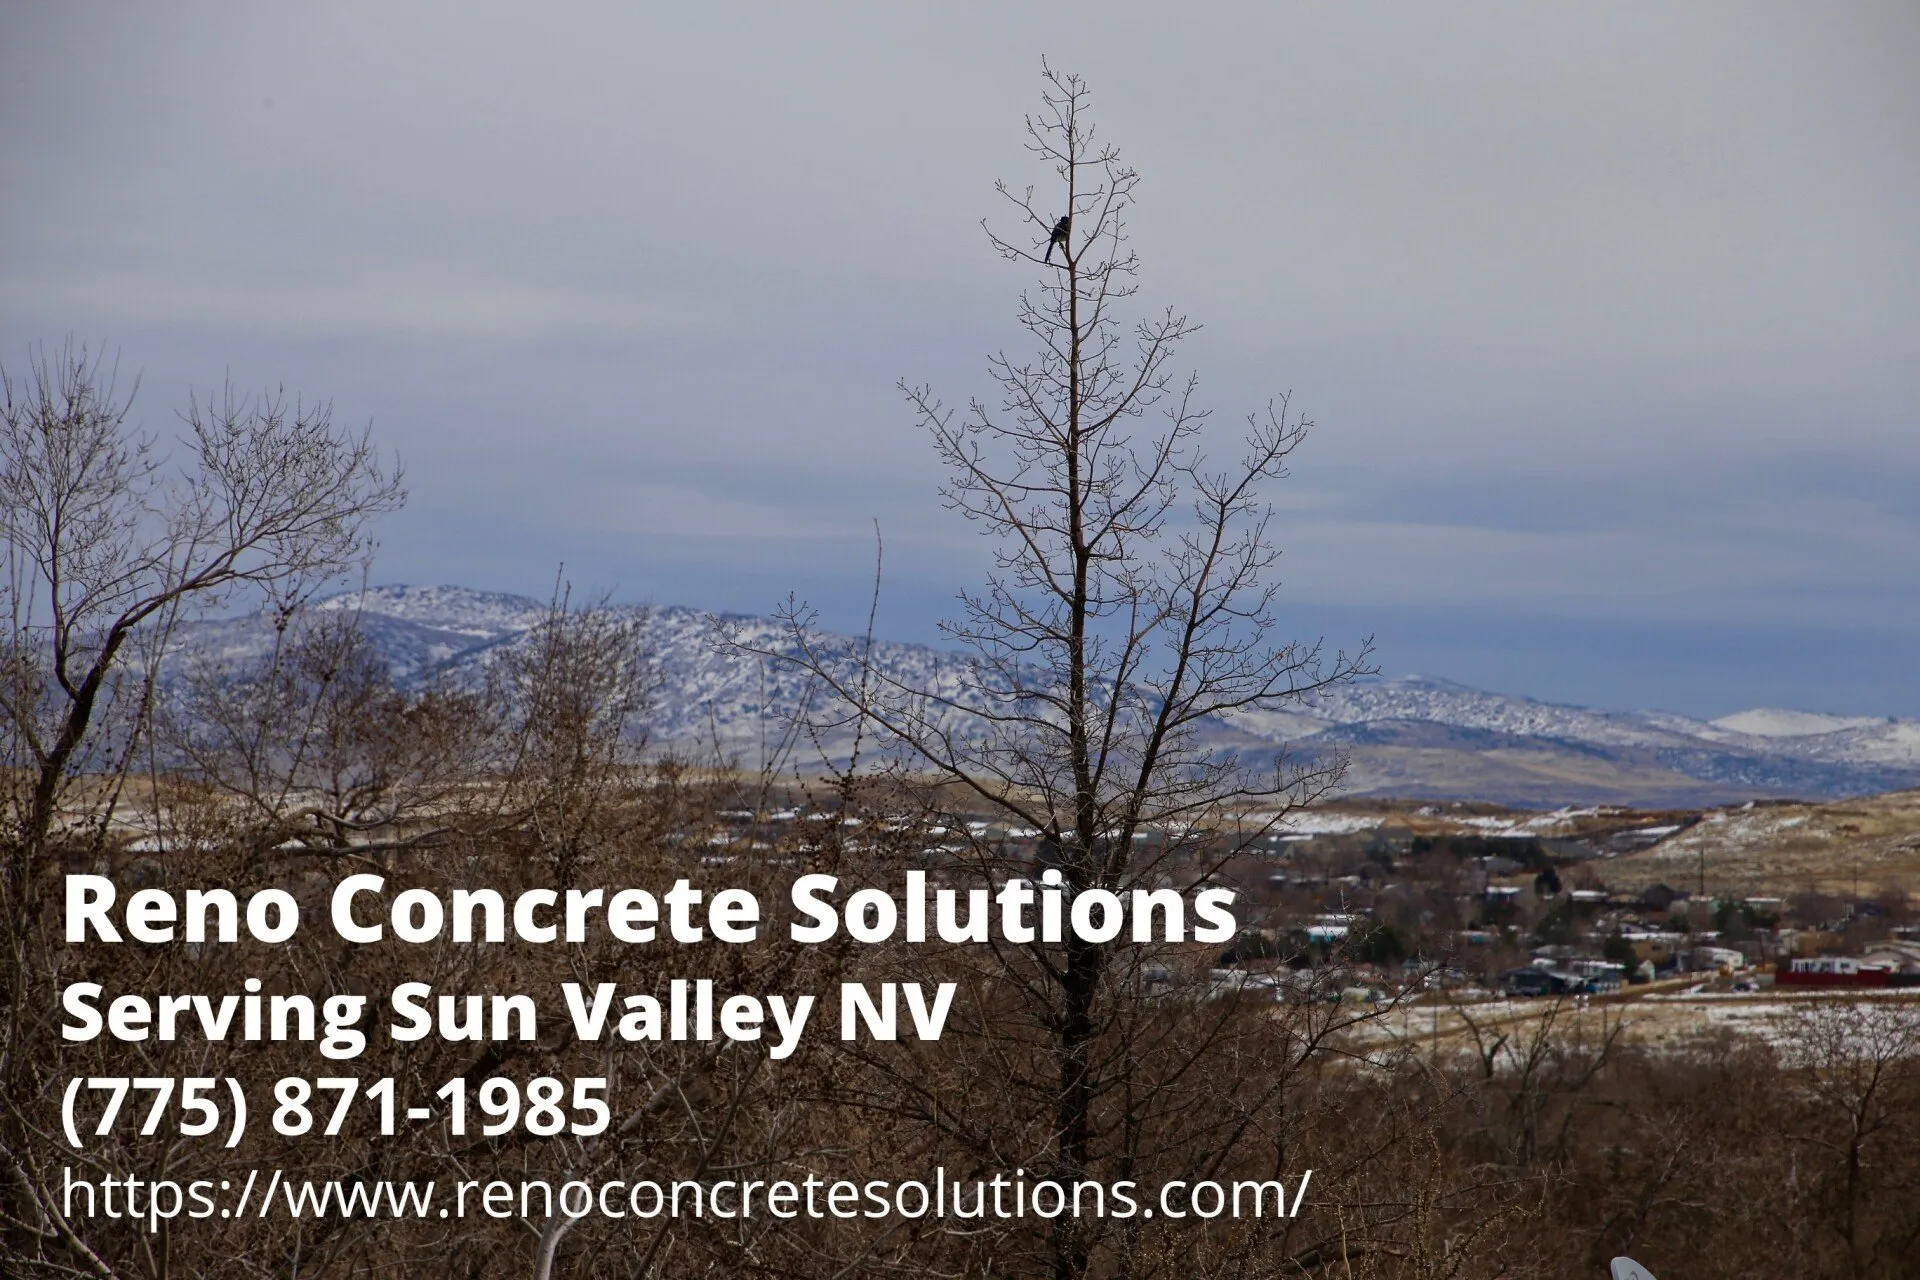 business of Reno Concrete Solutions - a decorative concrete company serving the Sun Valley area